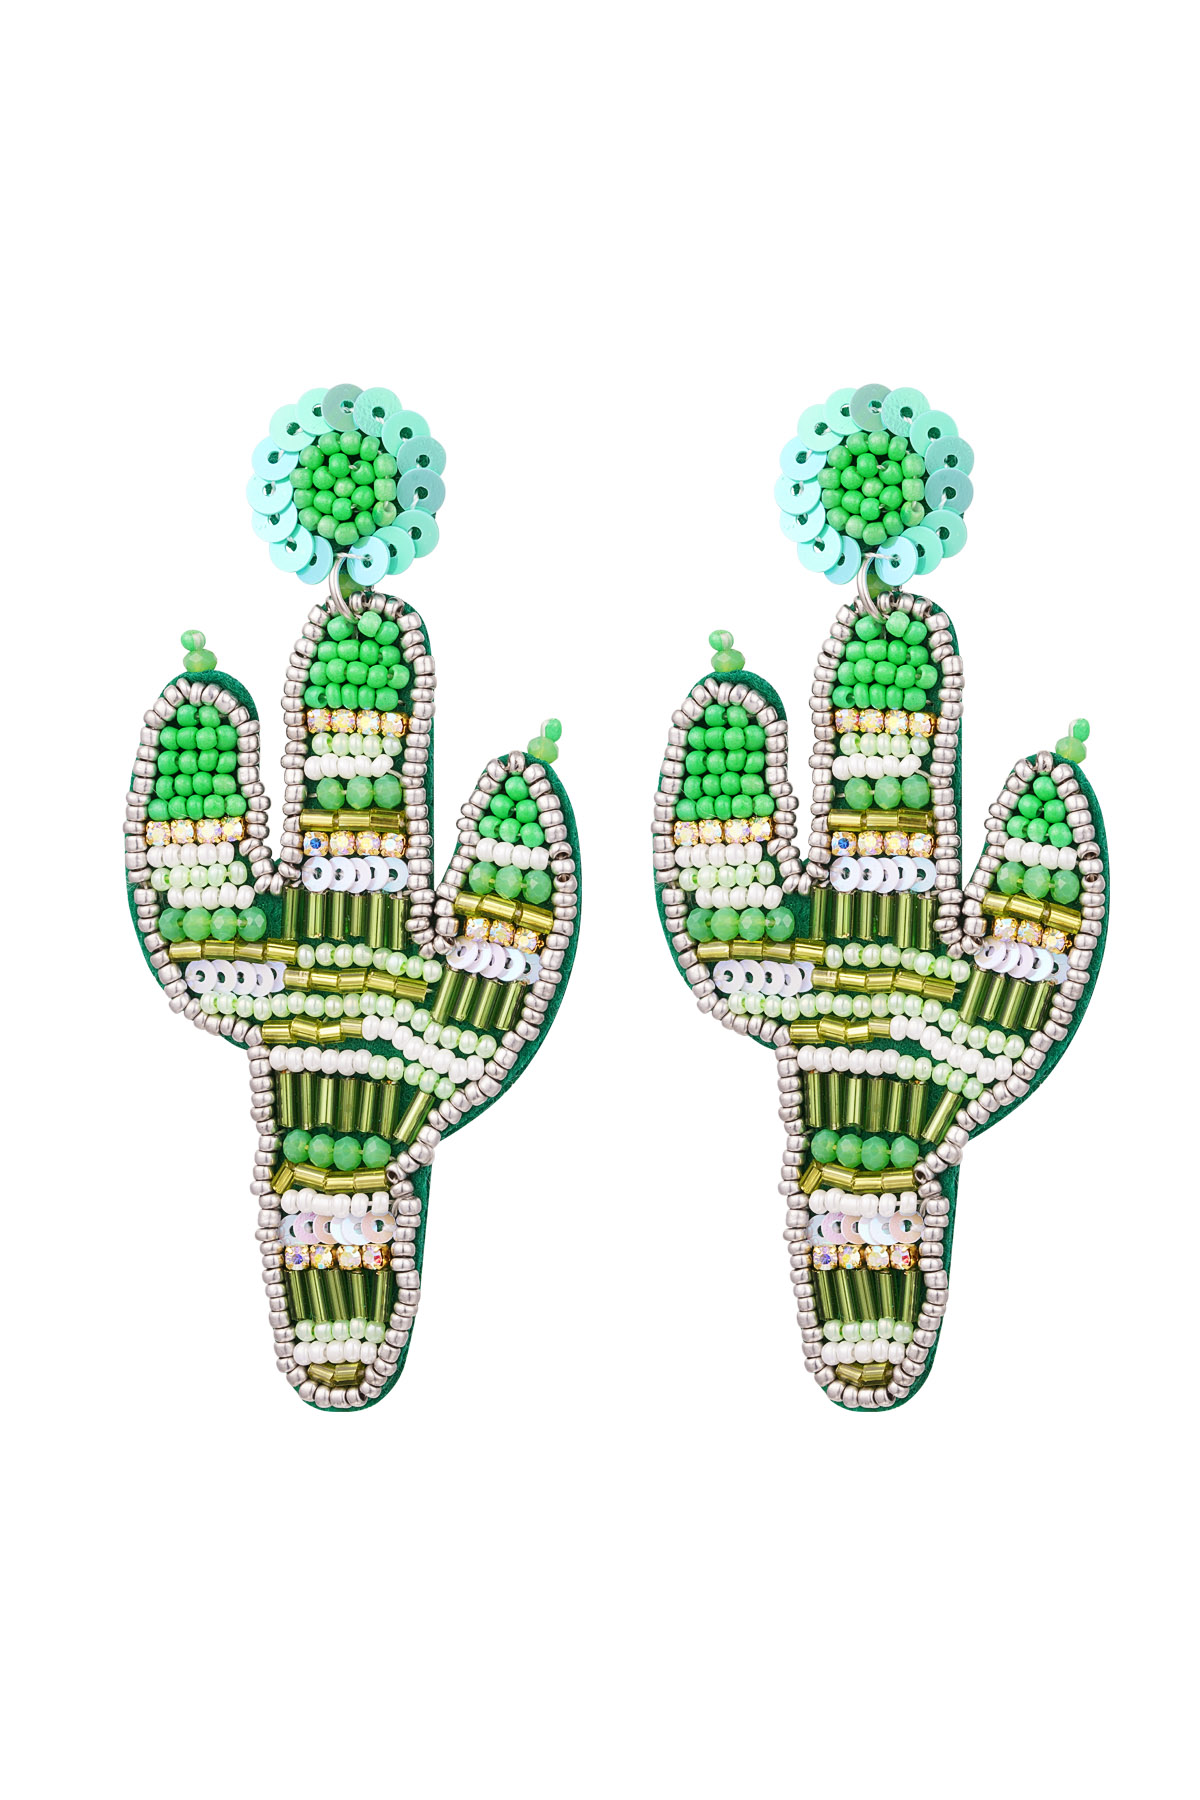 Beaded earrings cactus - green Glass beads